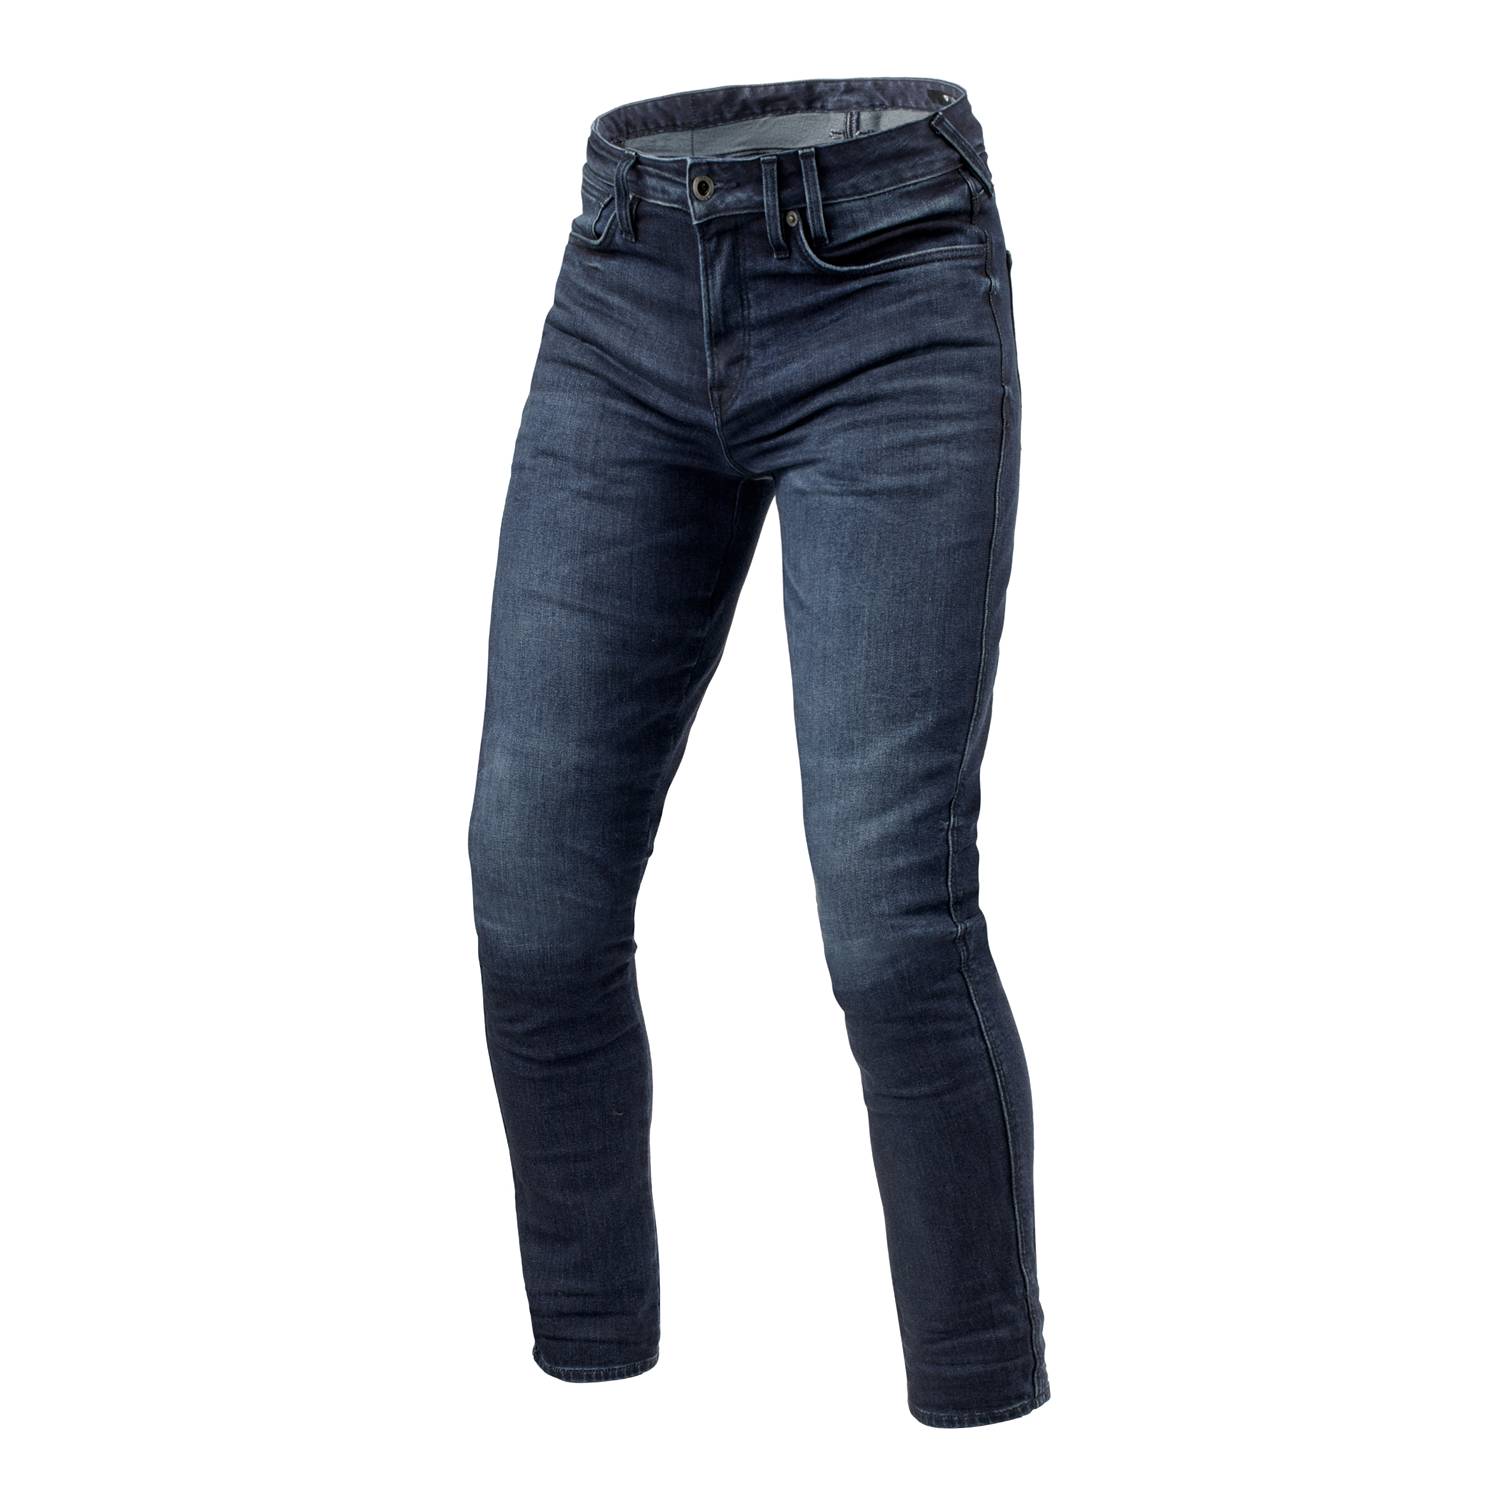 Image of REV'IT! Jeans Carlin SK Dark Blue Used L32 Motorcycle Jeans Größe L32/W28